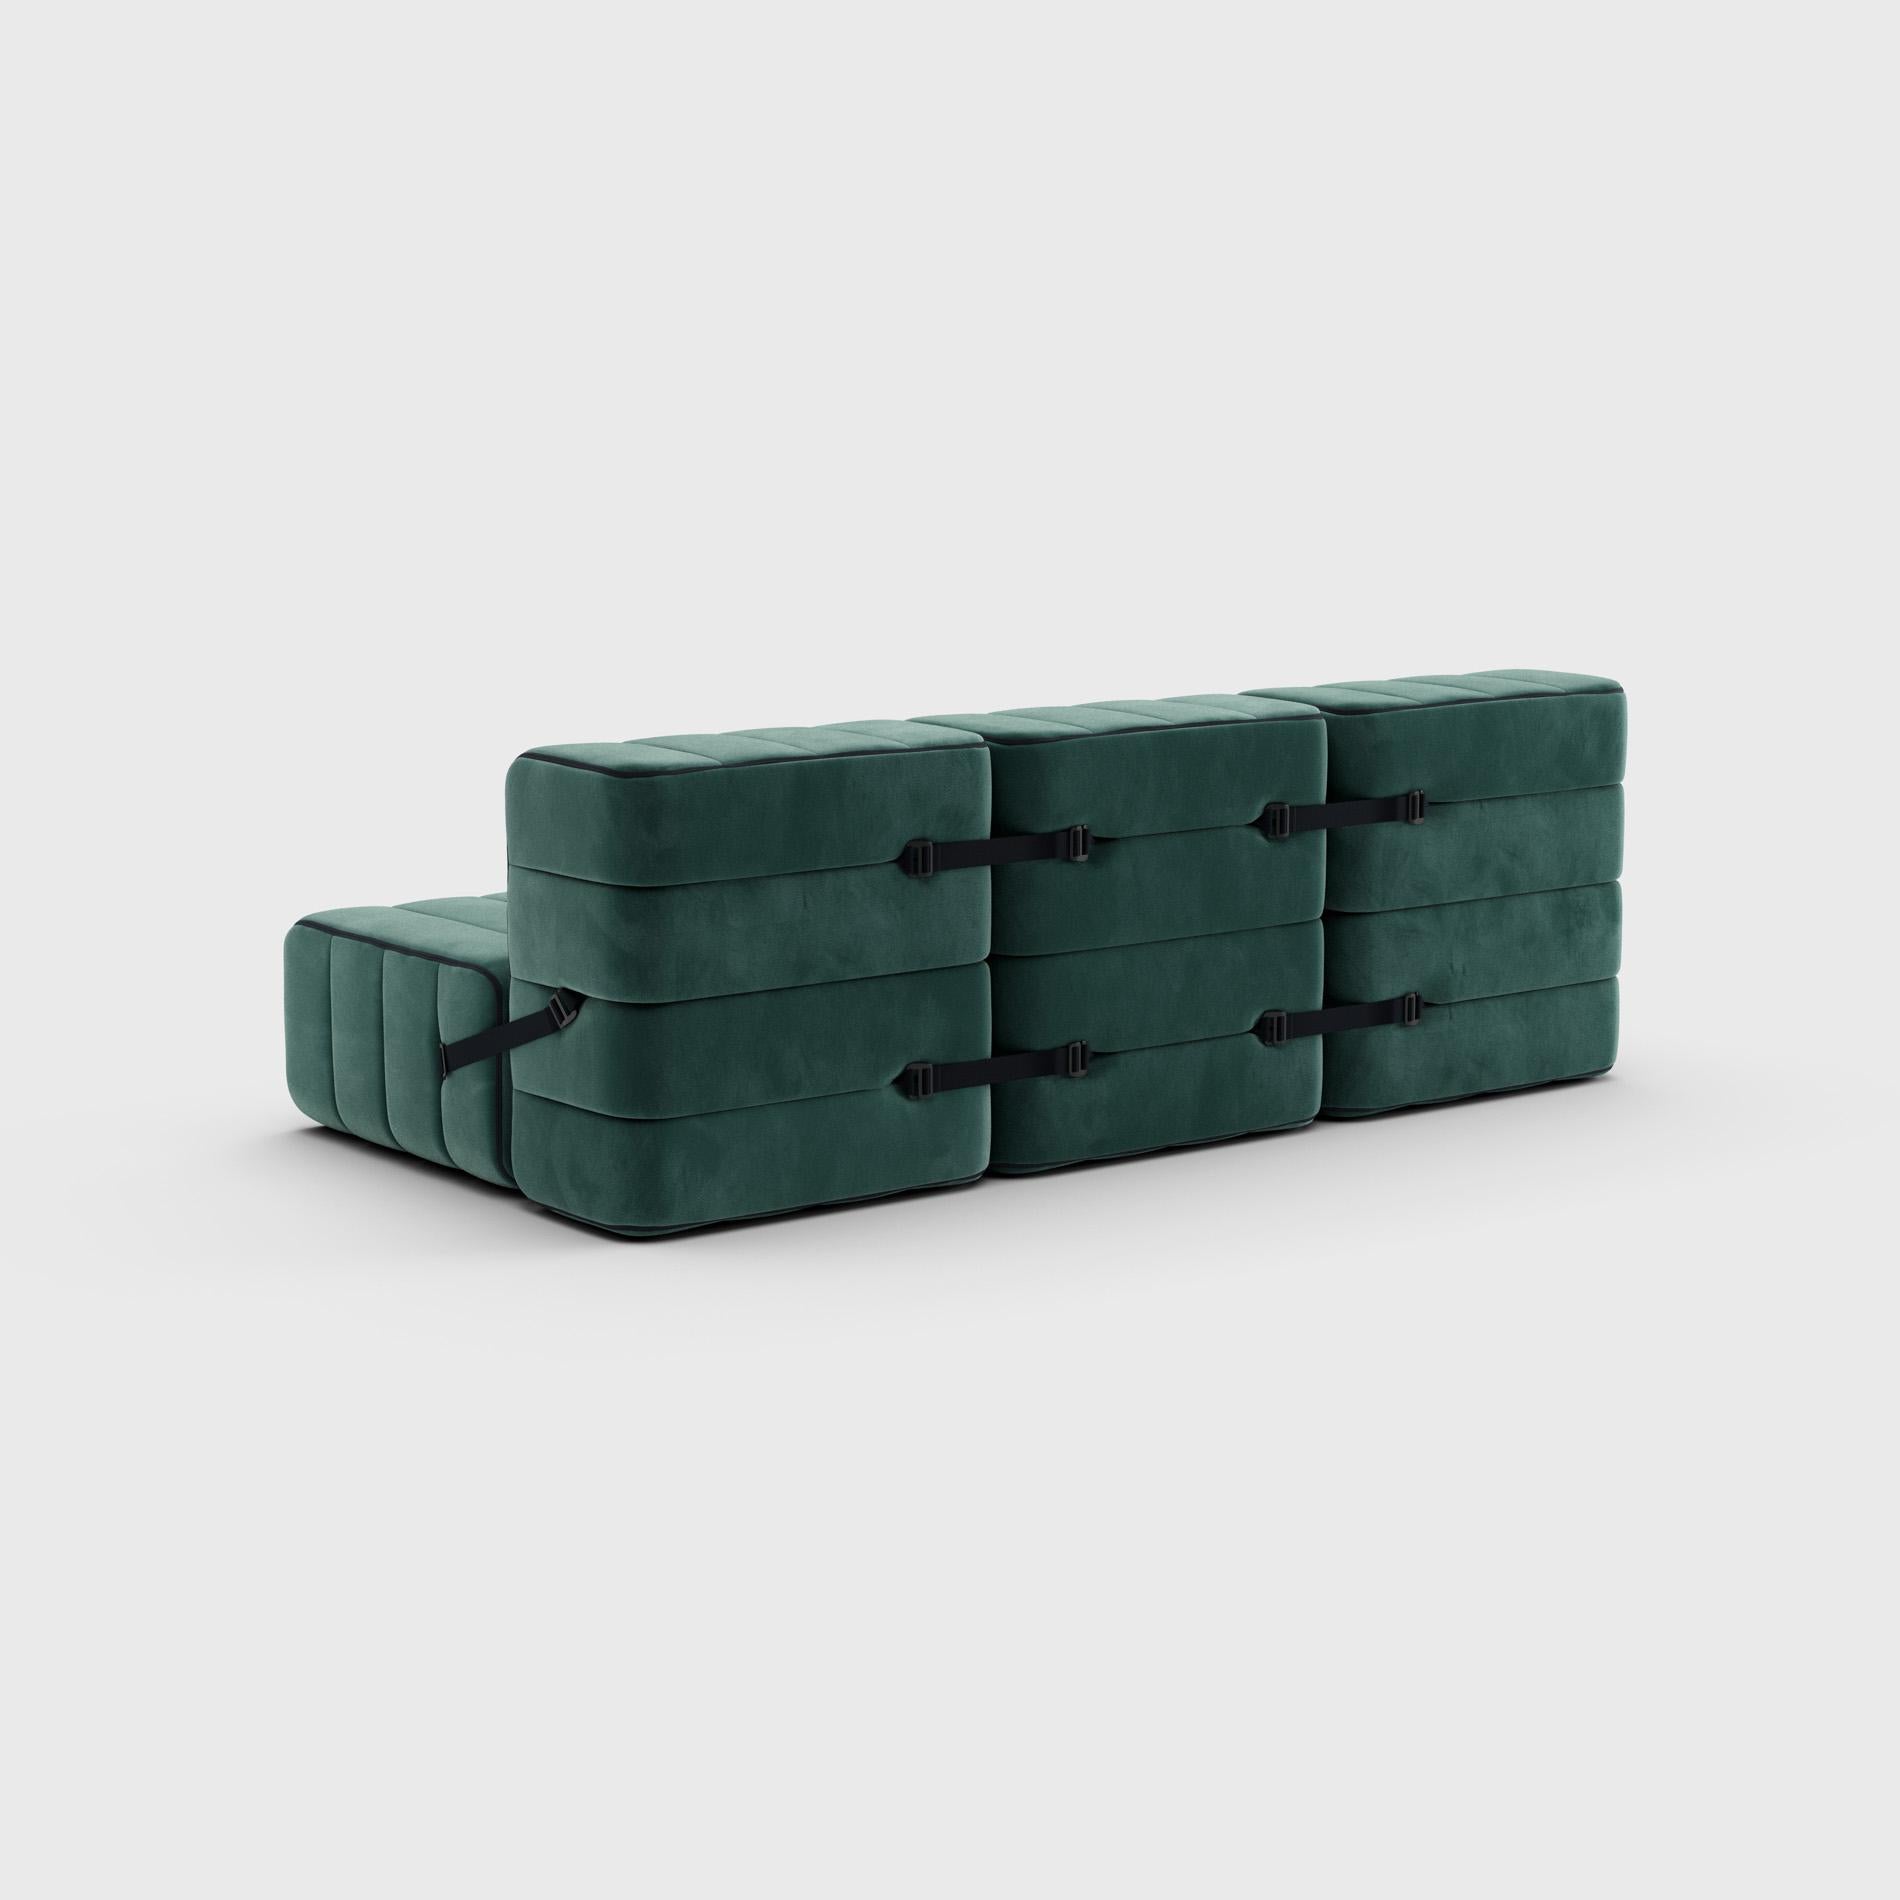 German Curt Single Module – Fabric Barcelona 'Serpentine' – Curt Modular Sofa System For Sale